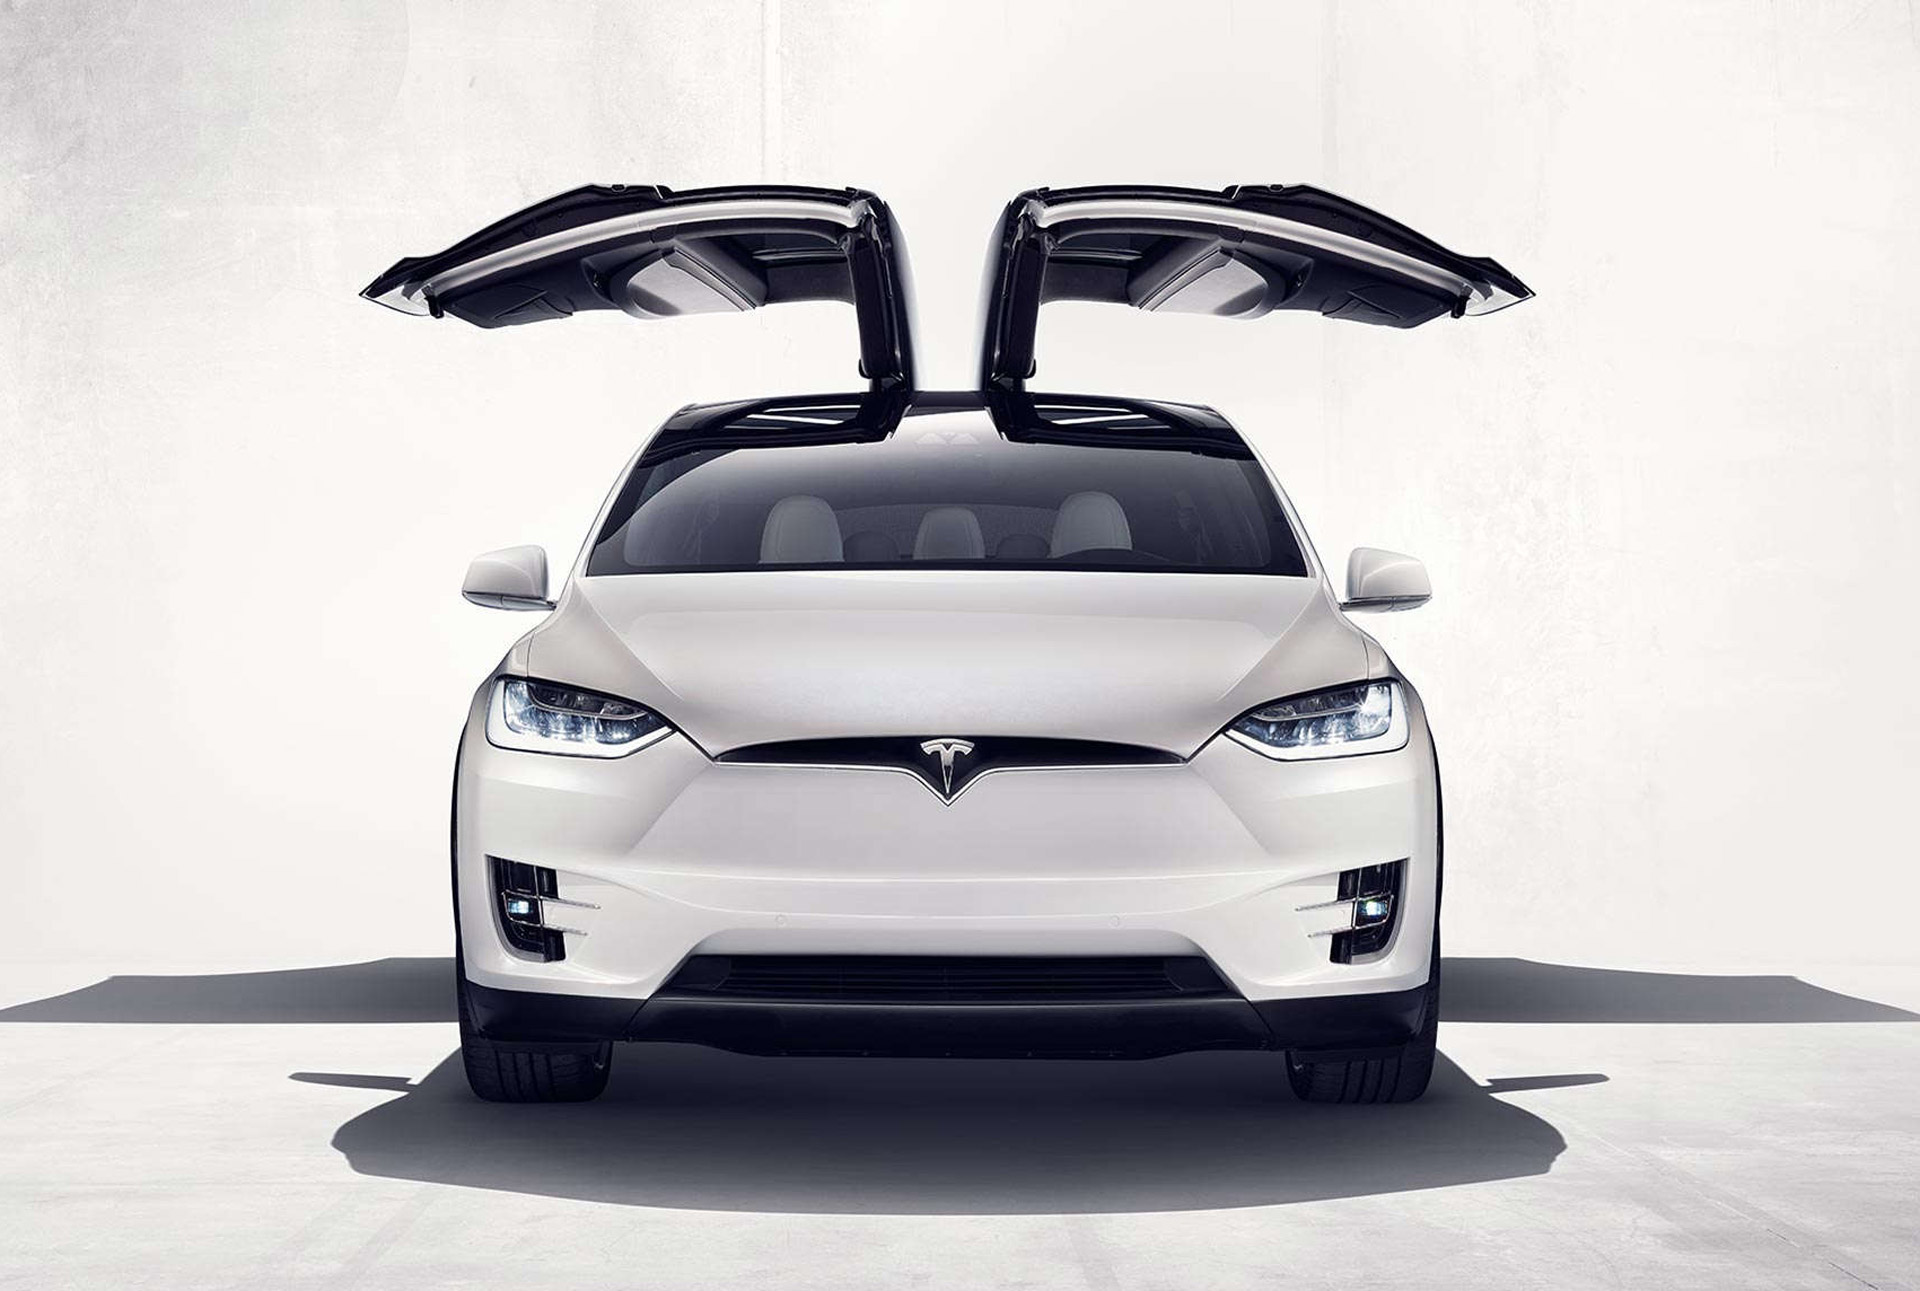 Tesla Electric Cars Pdf - Tildi Mallissa